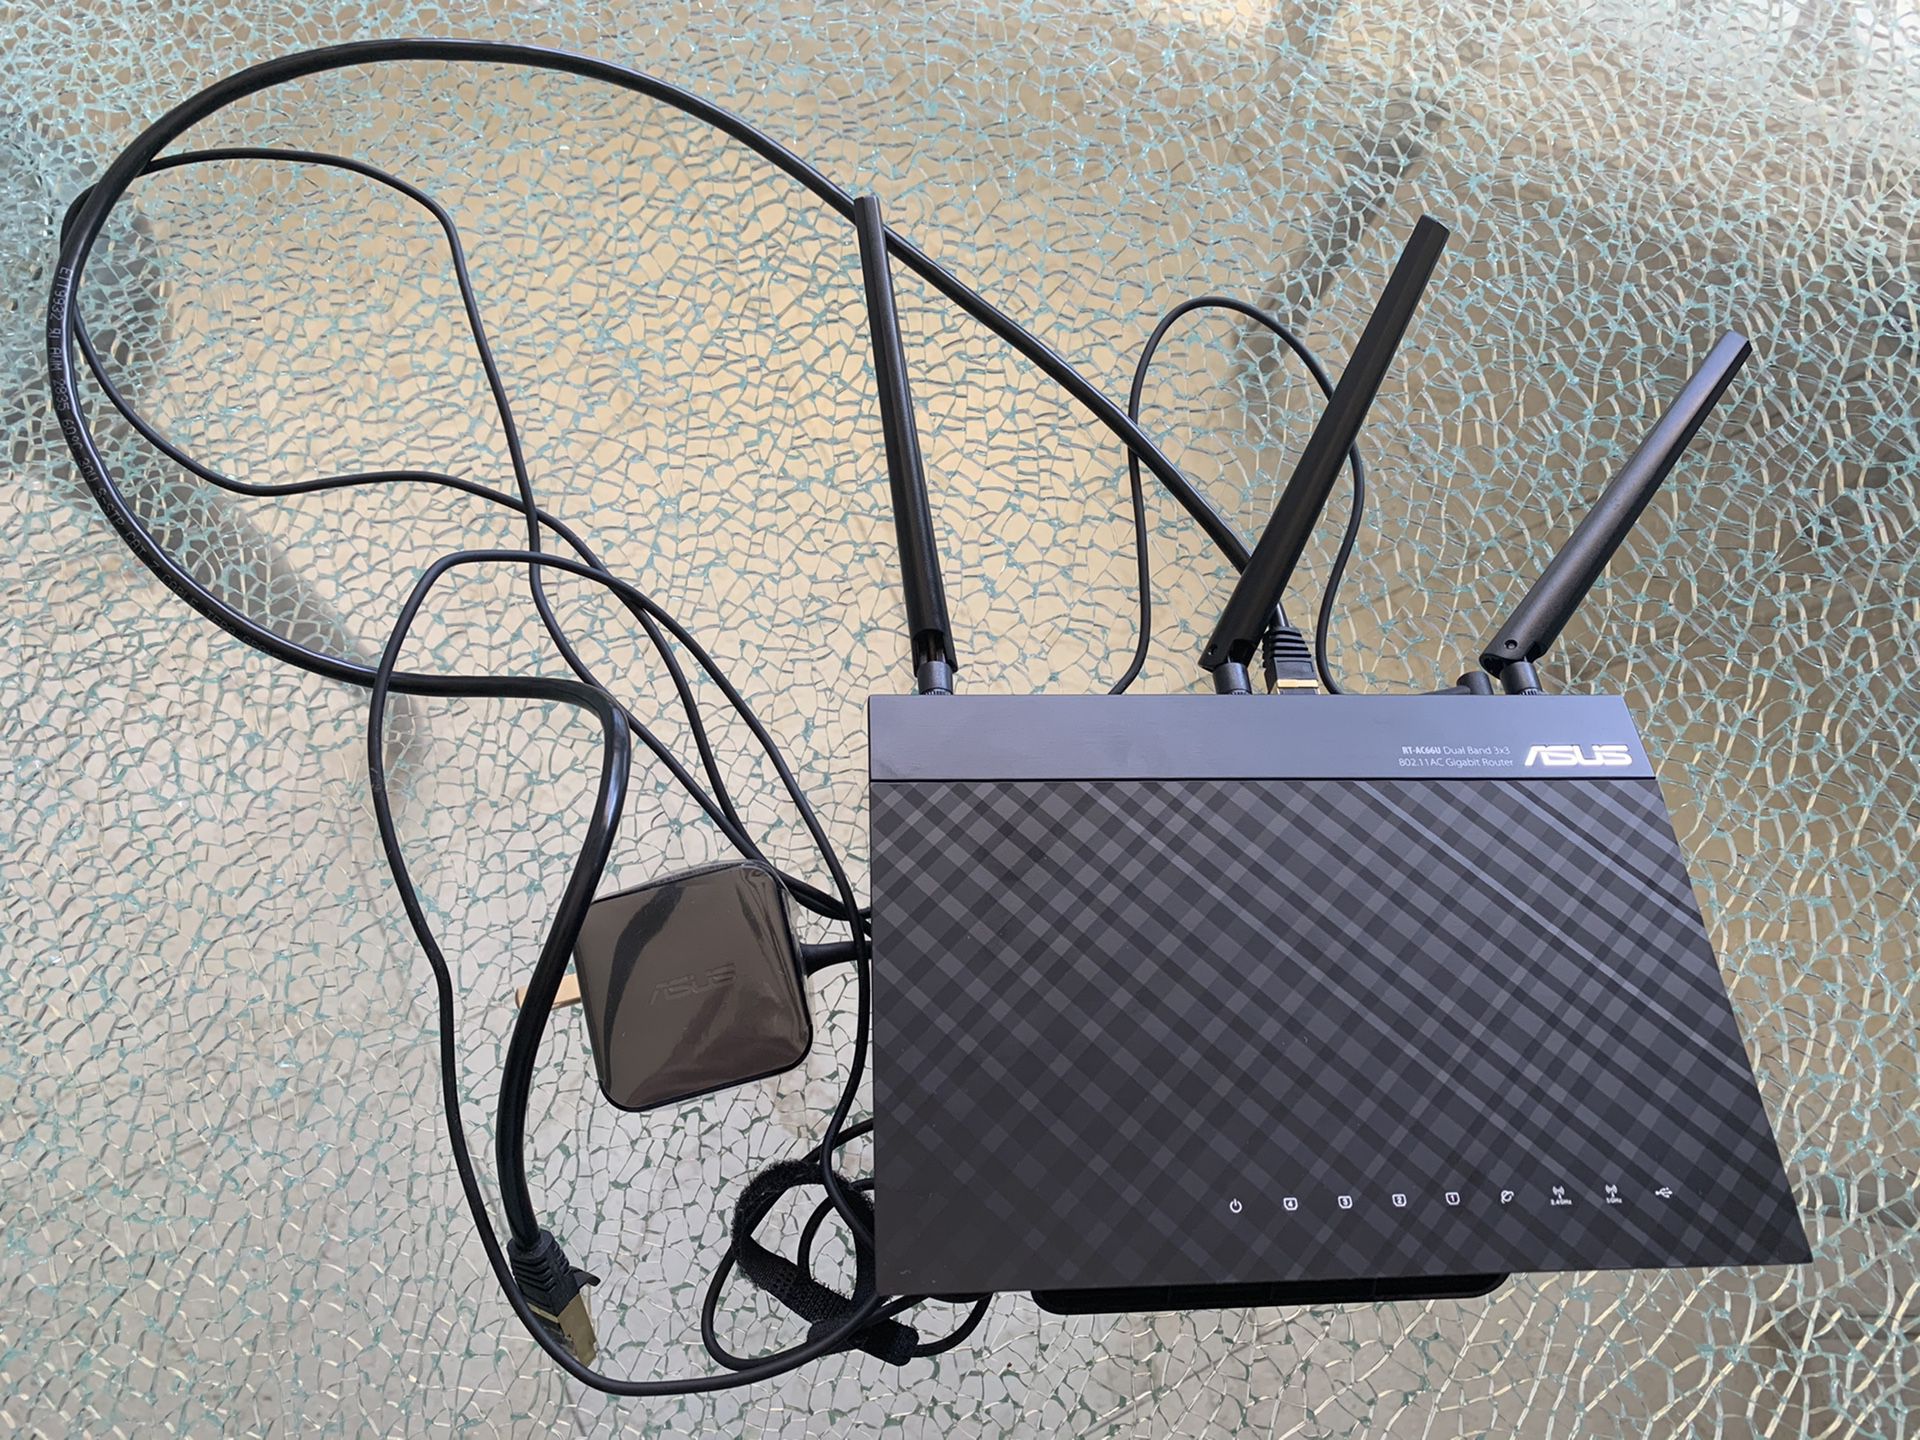 ASUS Dual-band AC1750 WiFi 4-port Gigabit Router